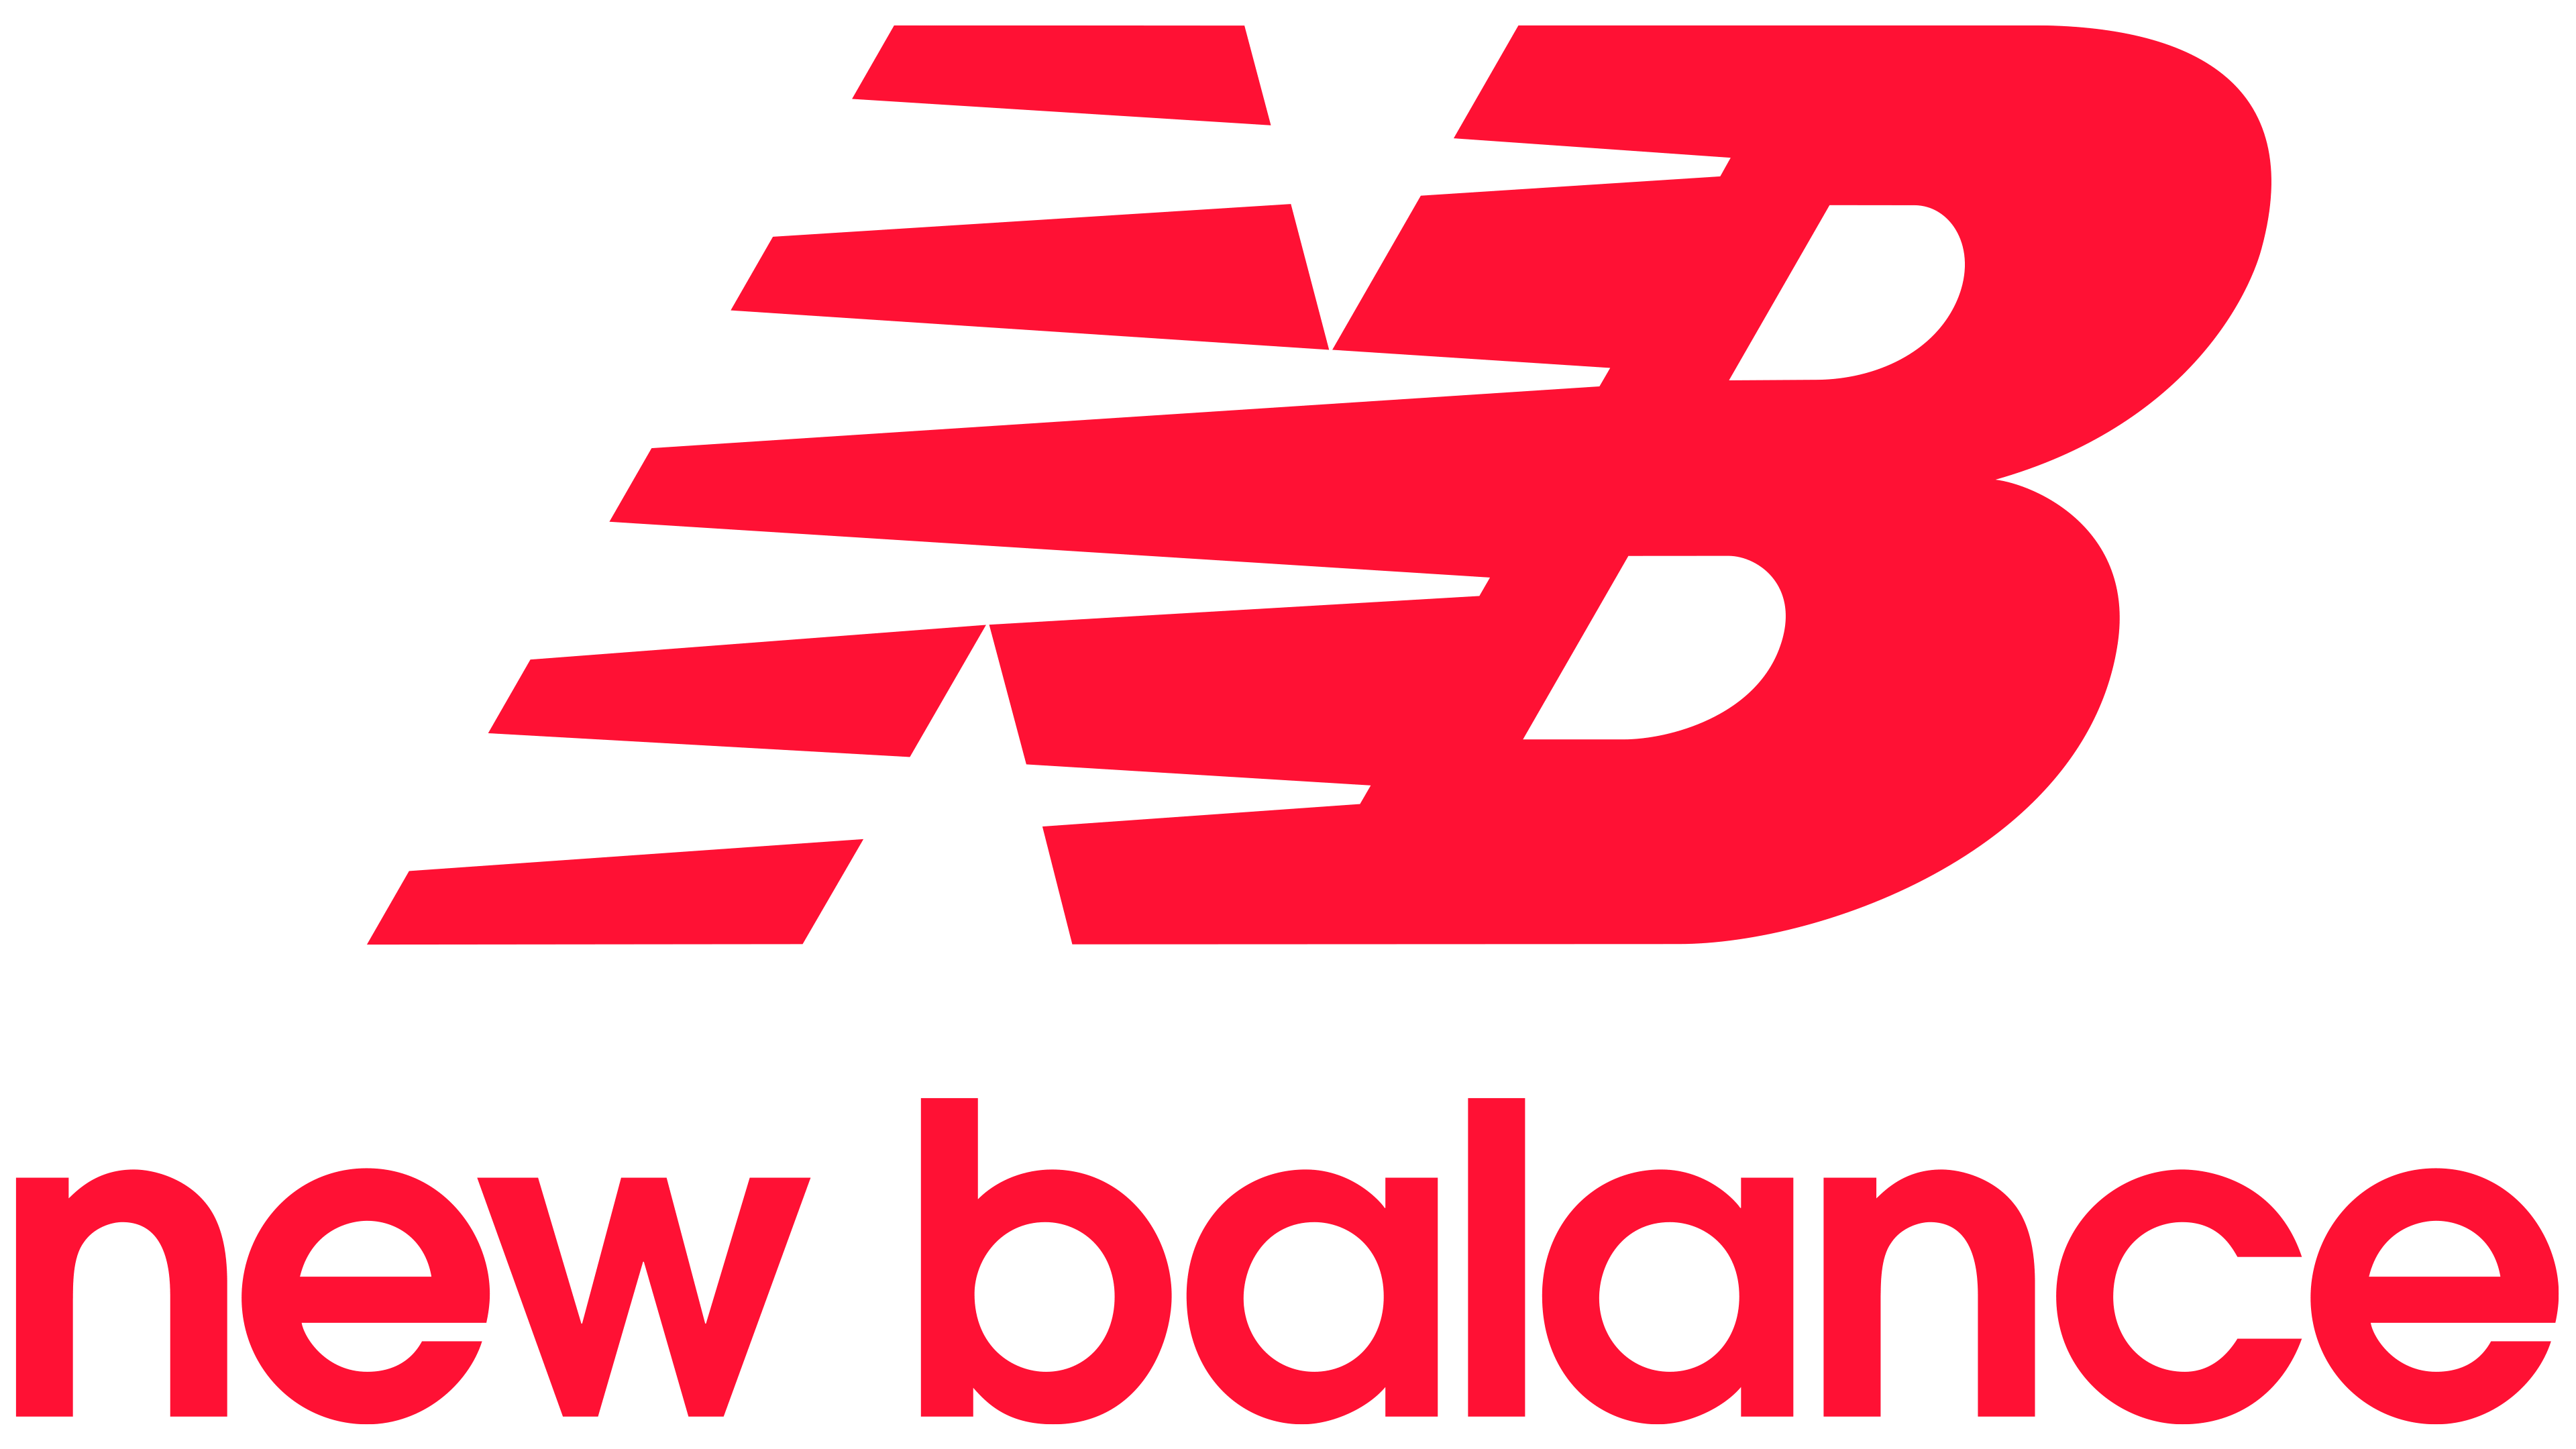 new balance marchio